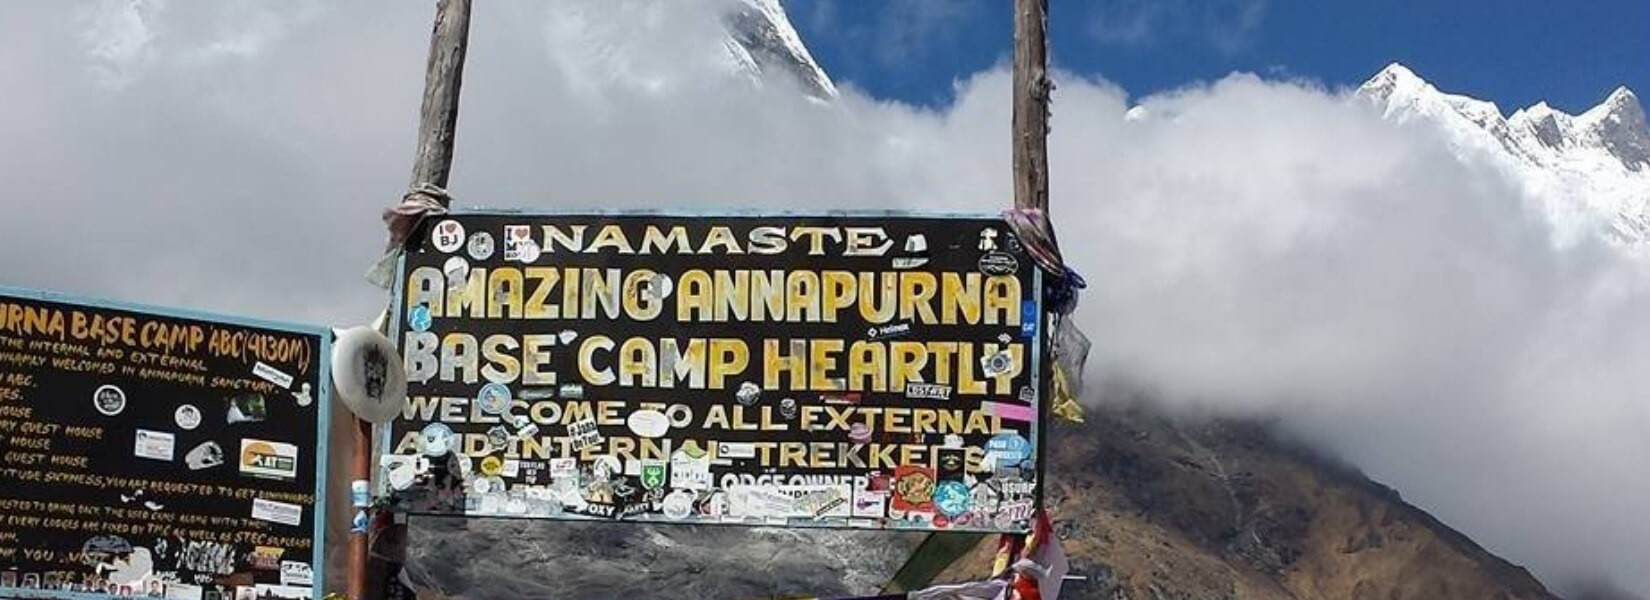 Annapurna Base Camp Trek Difficulty